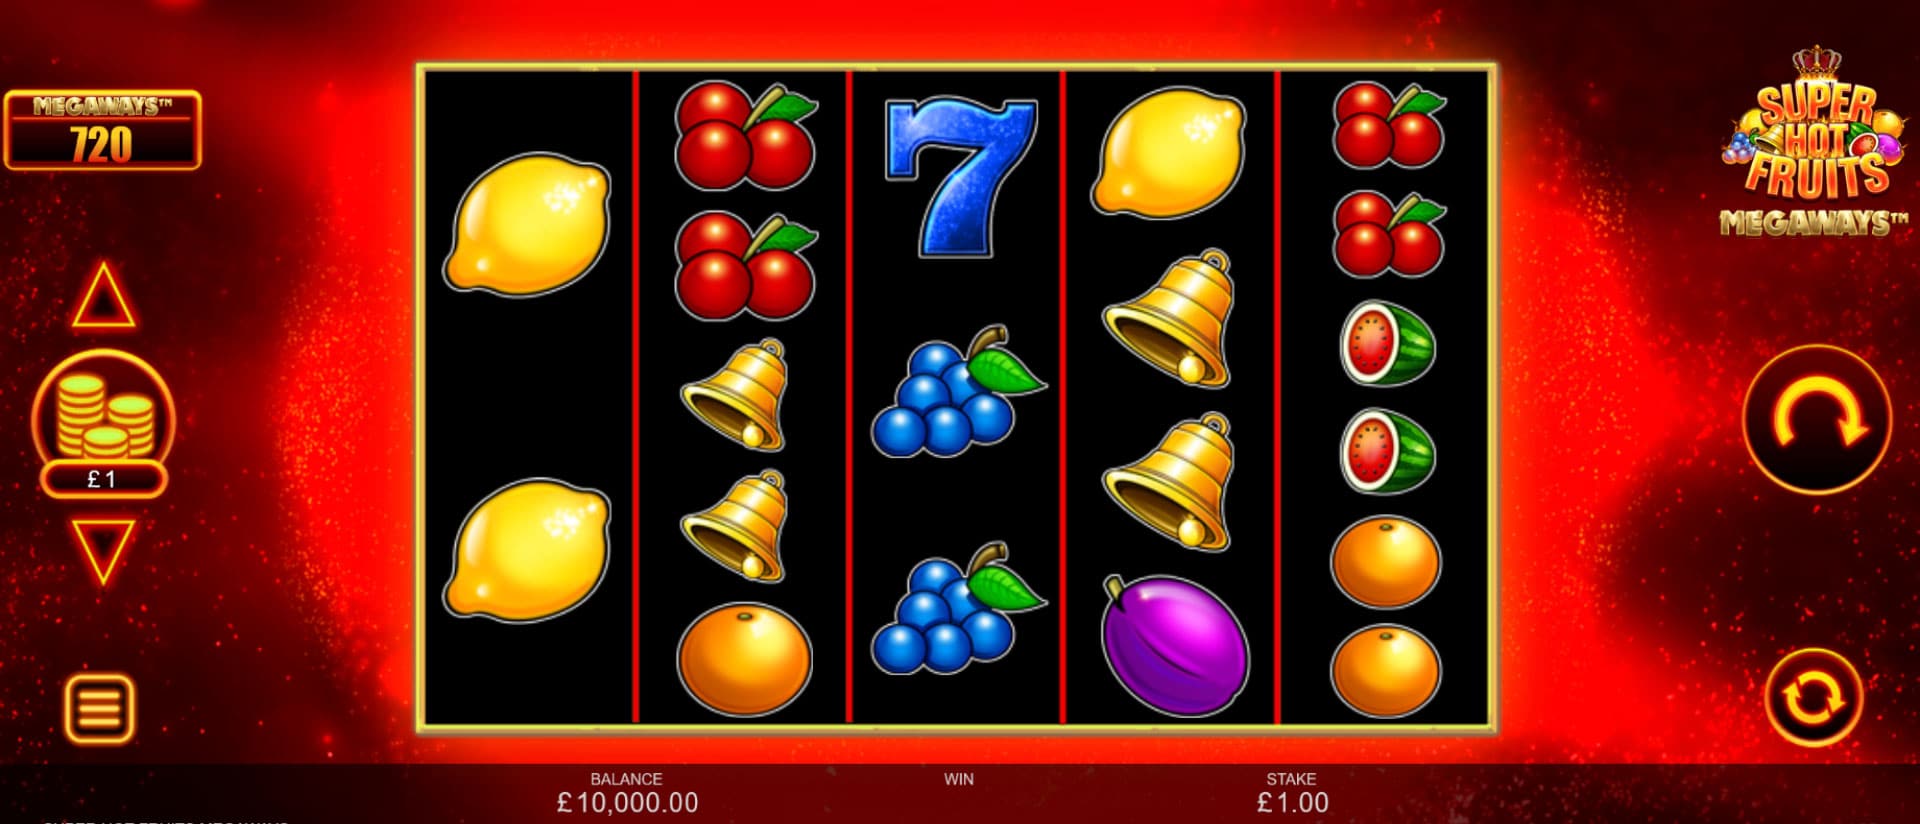 schermata della slot machine super hot fruits megaways